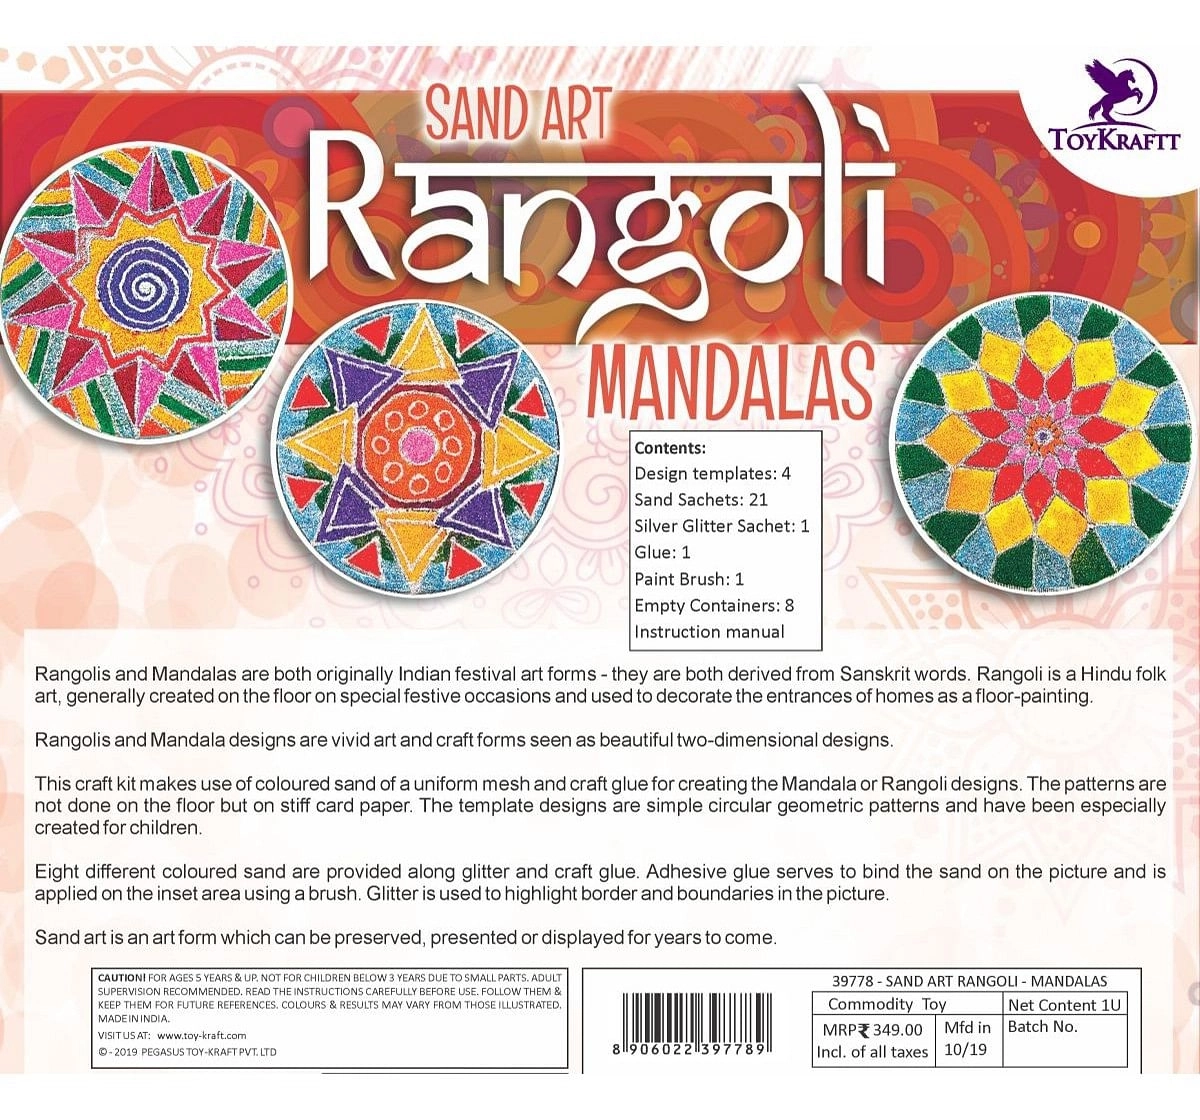 Toy Kraft Sand Art Rangoli Mandala, Multicolor, 5Y+